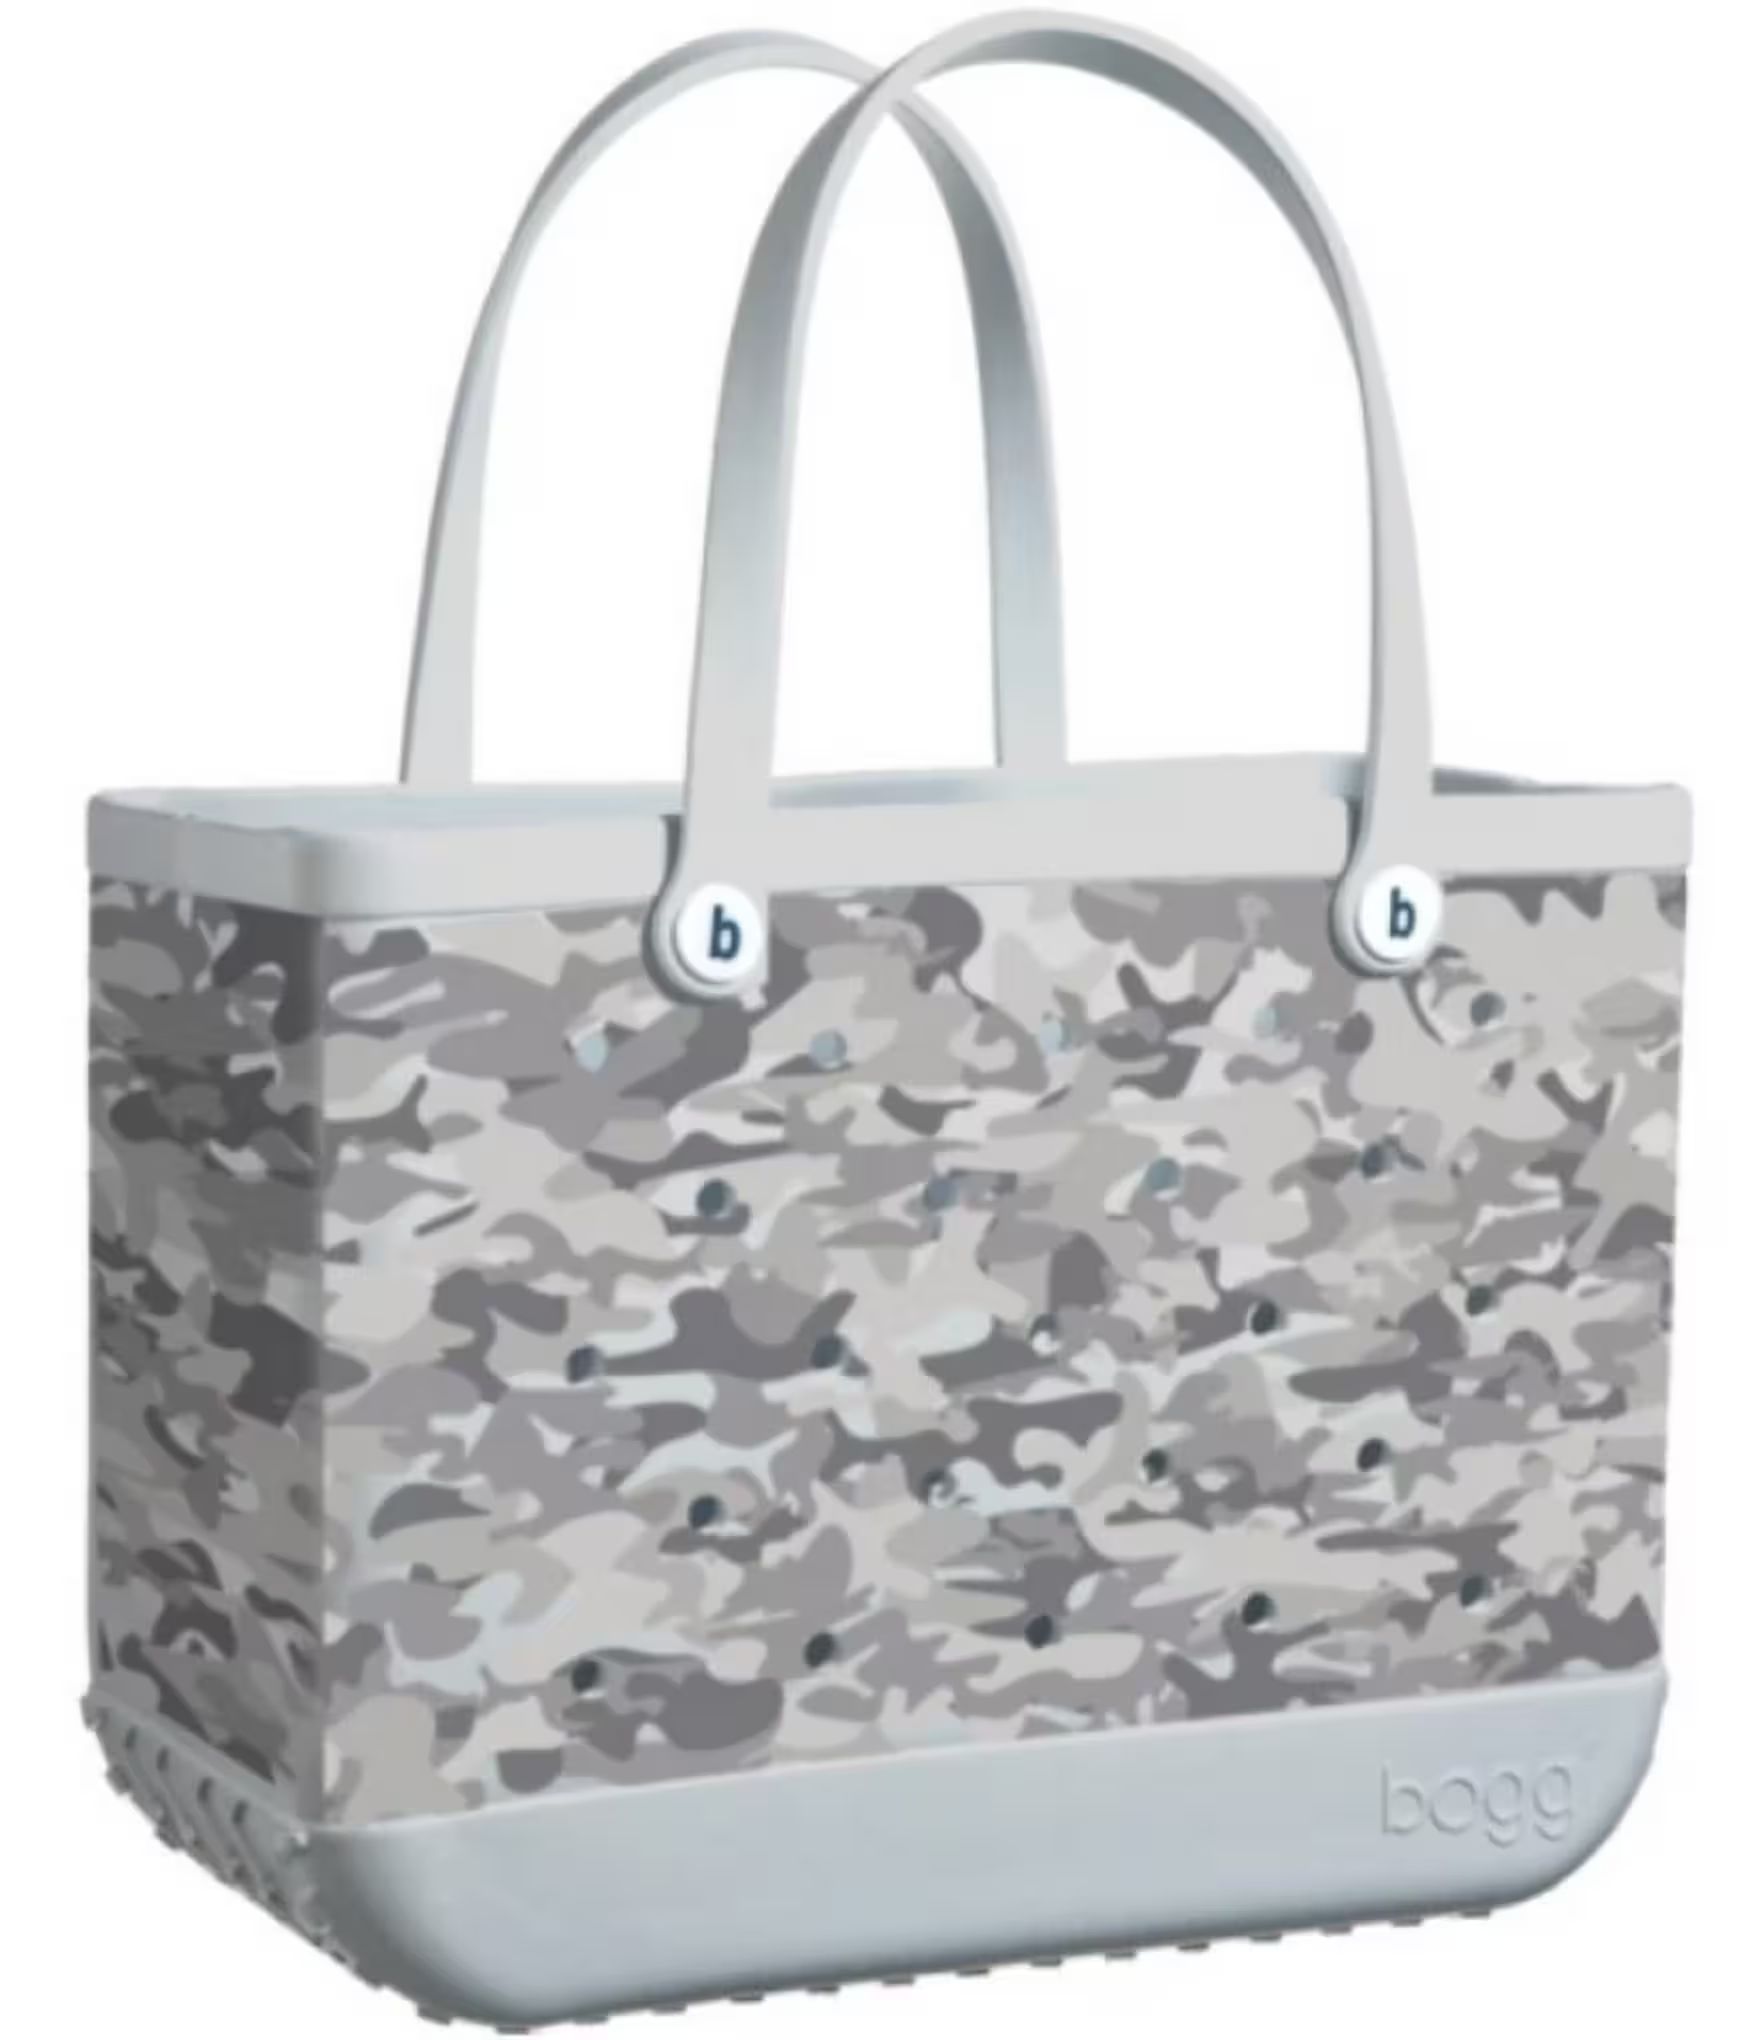 Bogg Bag Original Bogg Bag Grey Camo Tote | Dillard's | Dillard's